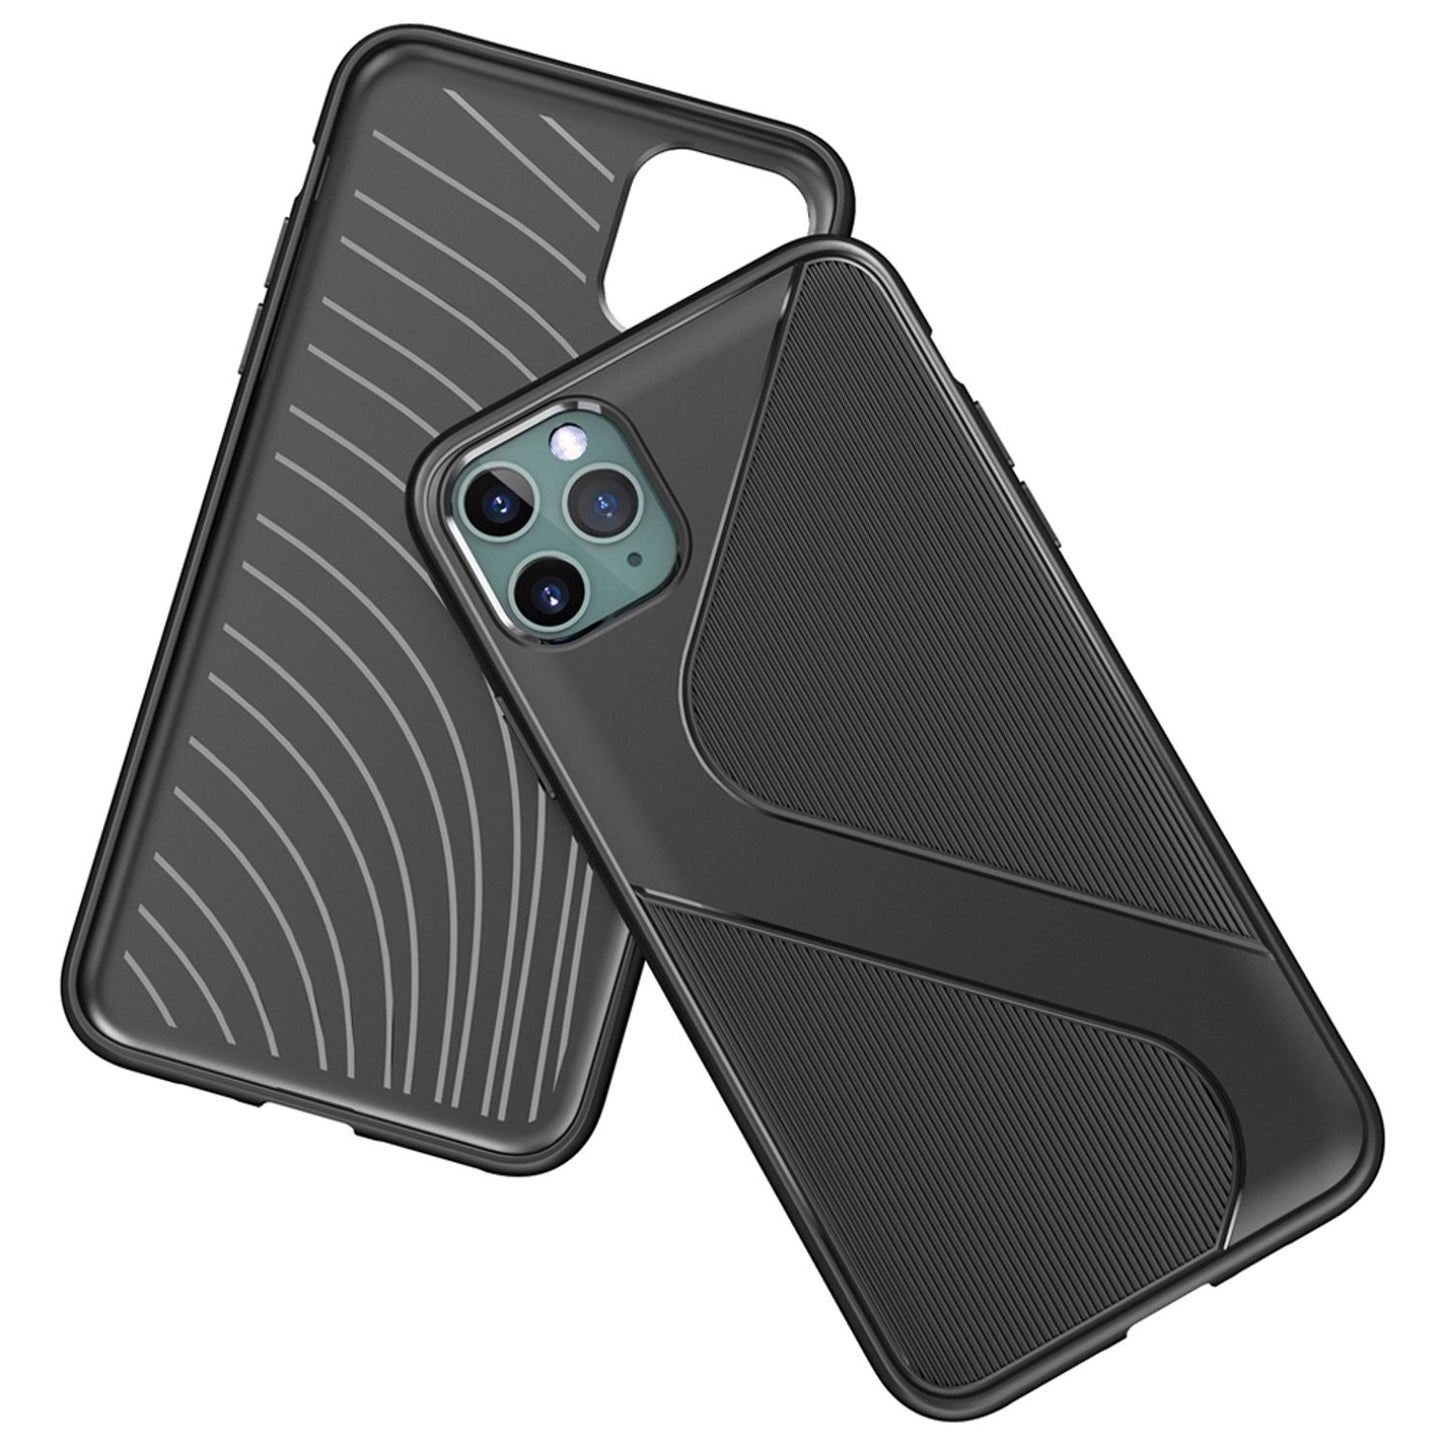 NALIA Handy Hülle für iPhone 11 Pro, Silikon Schutzhülle Case TPU Cover stoßfest